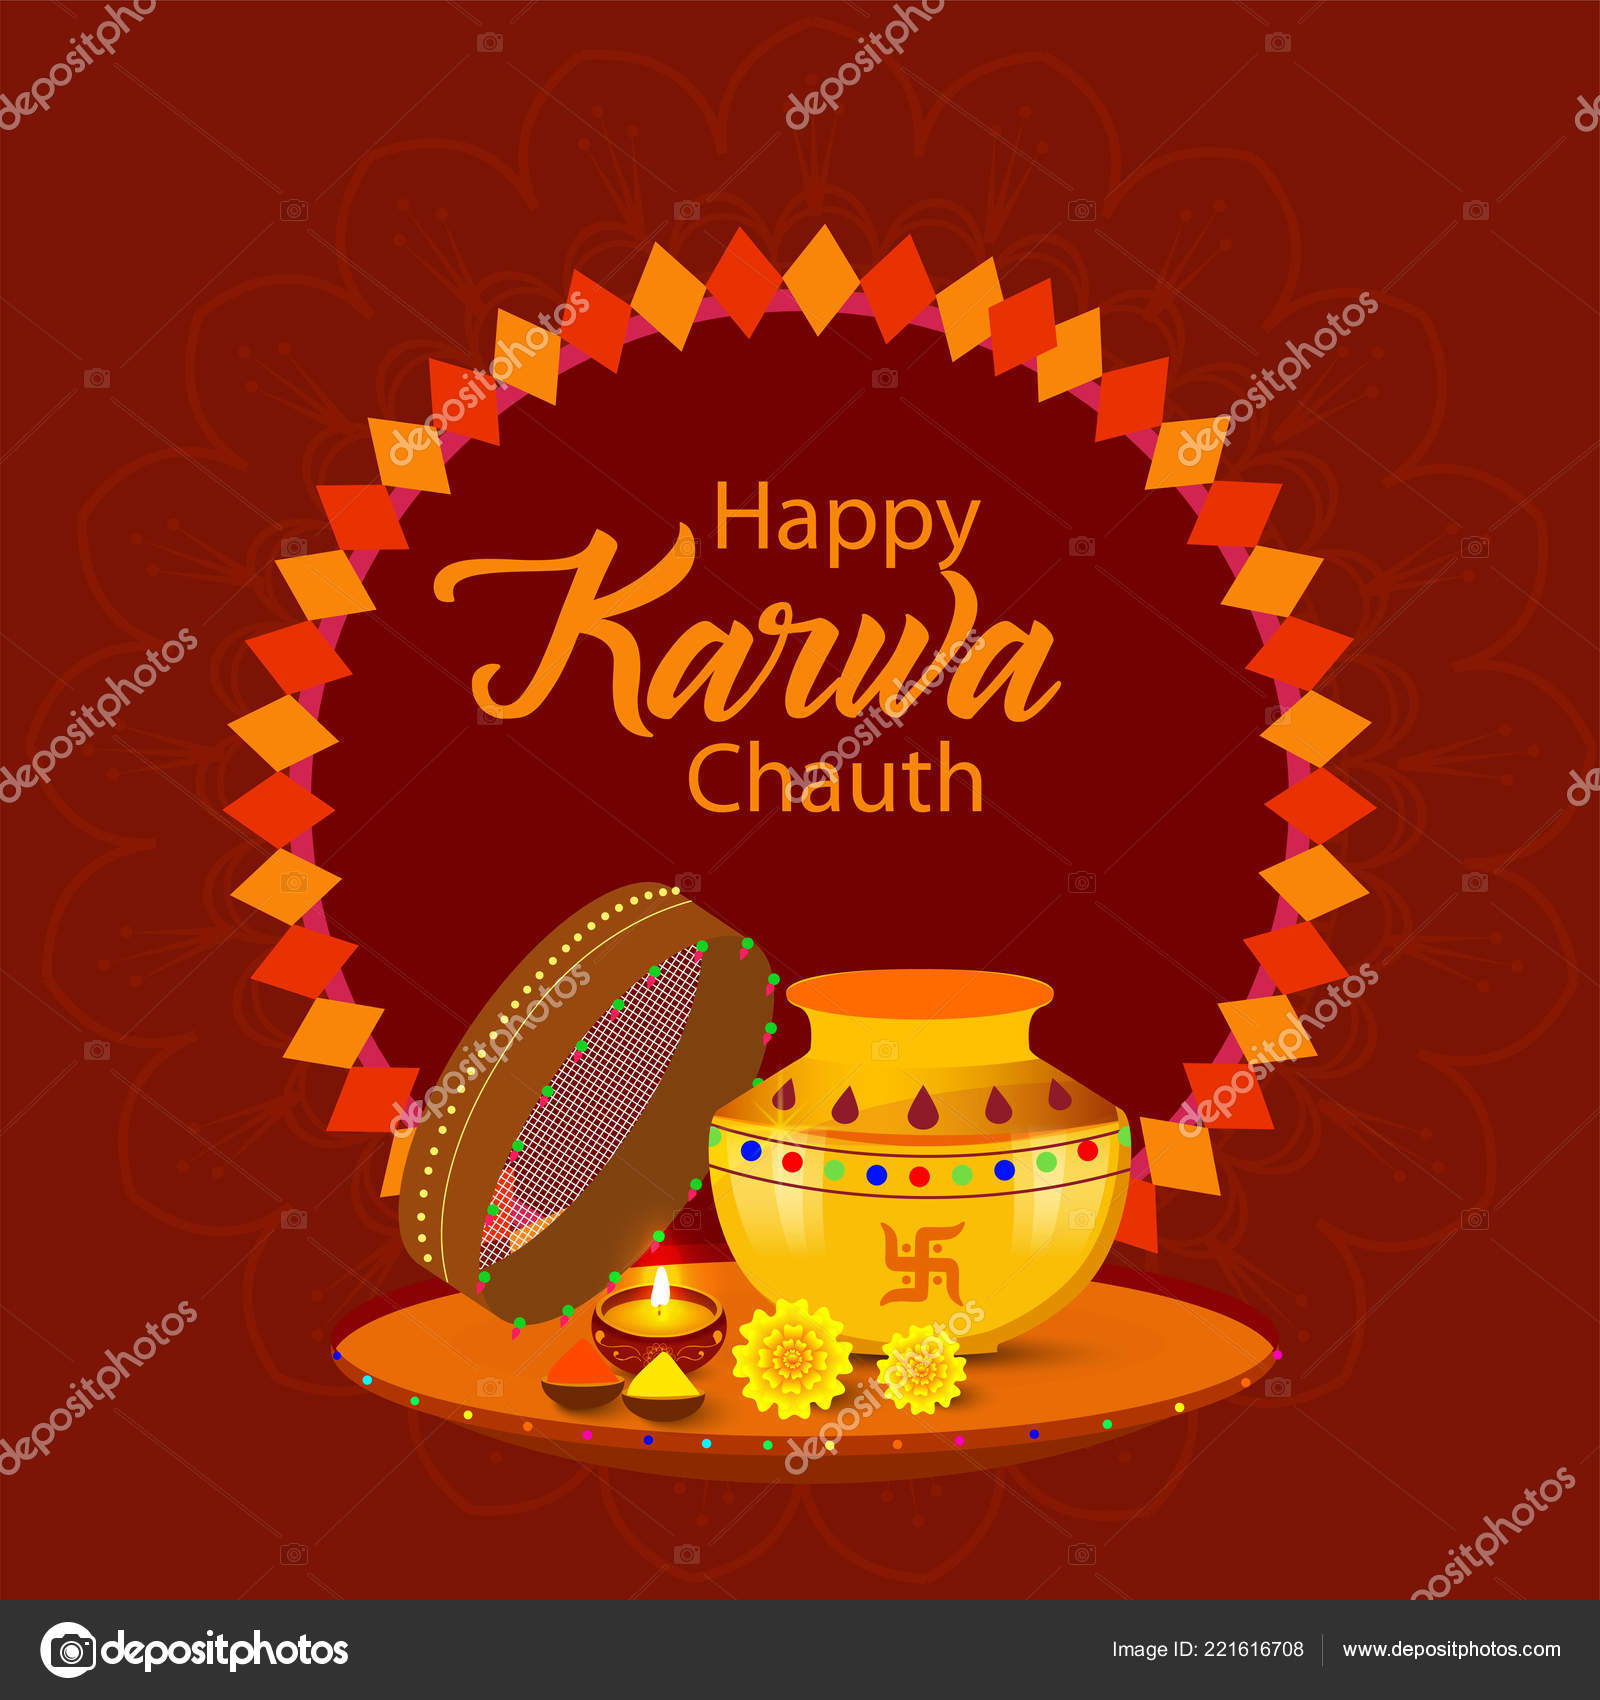 Karwa chauth vector art stock images